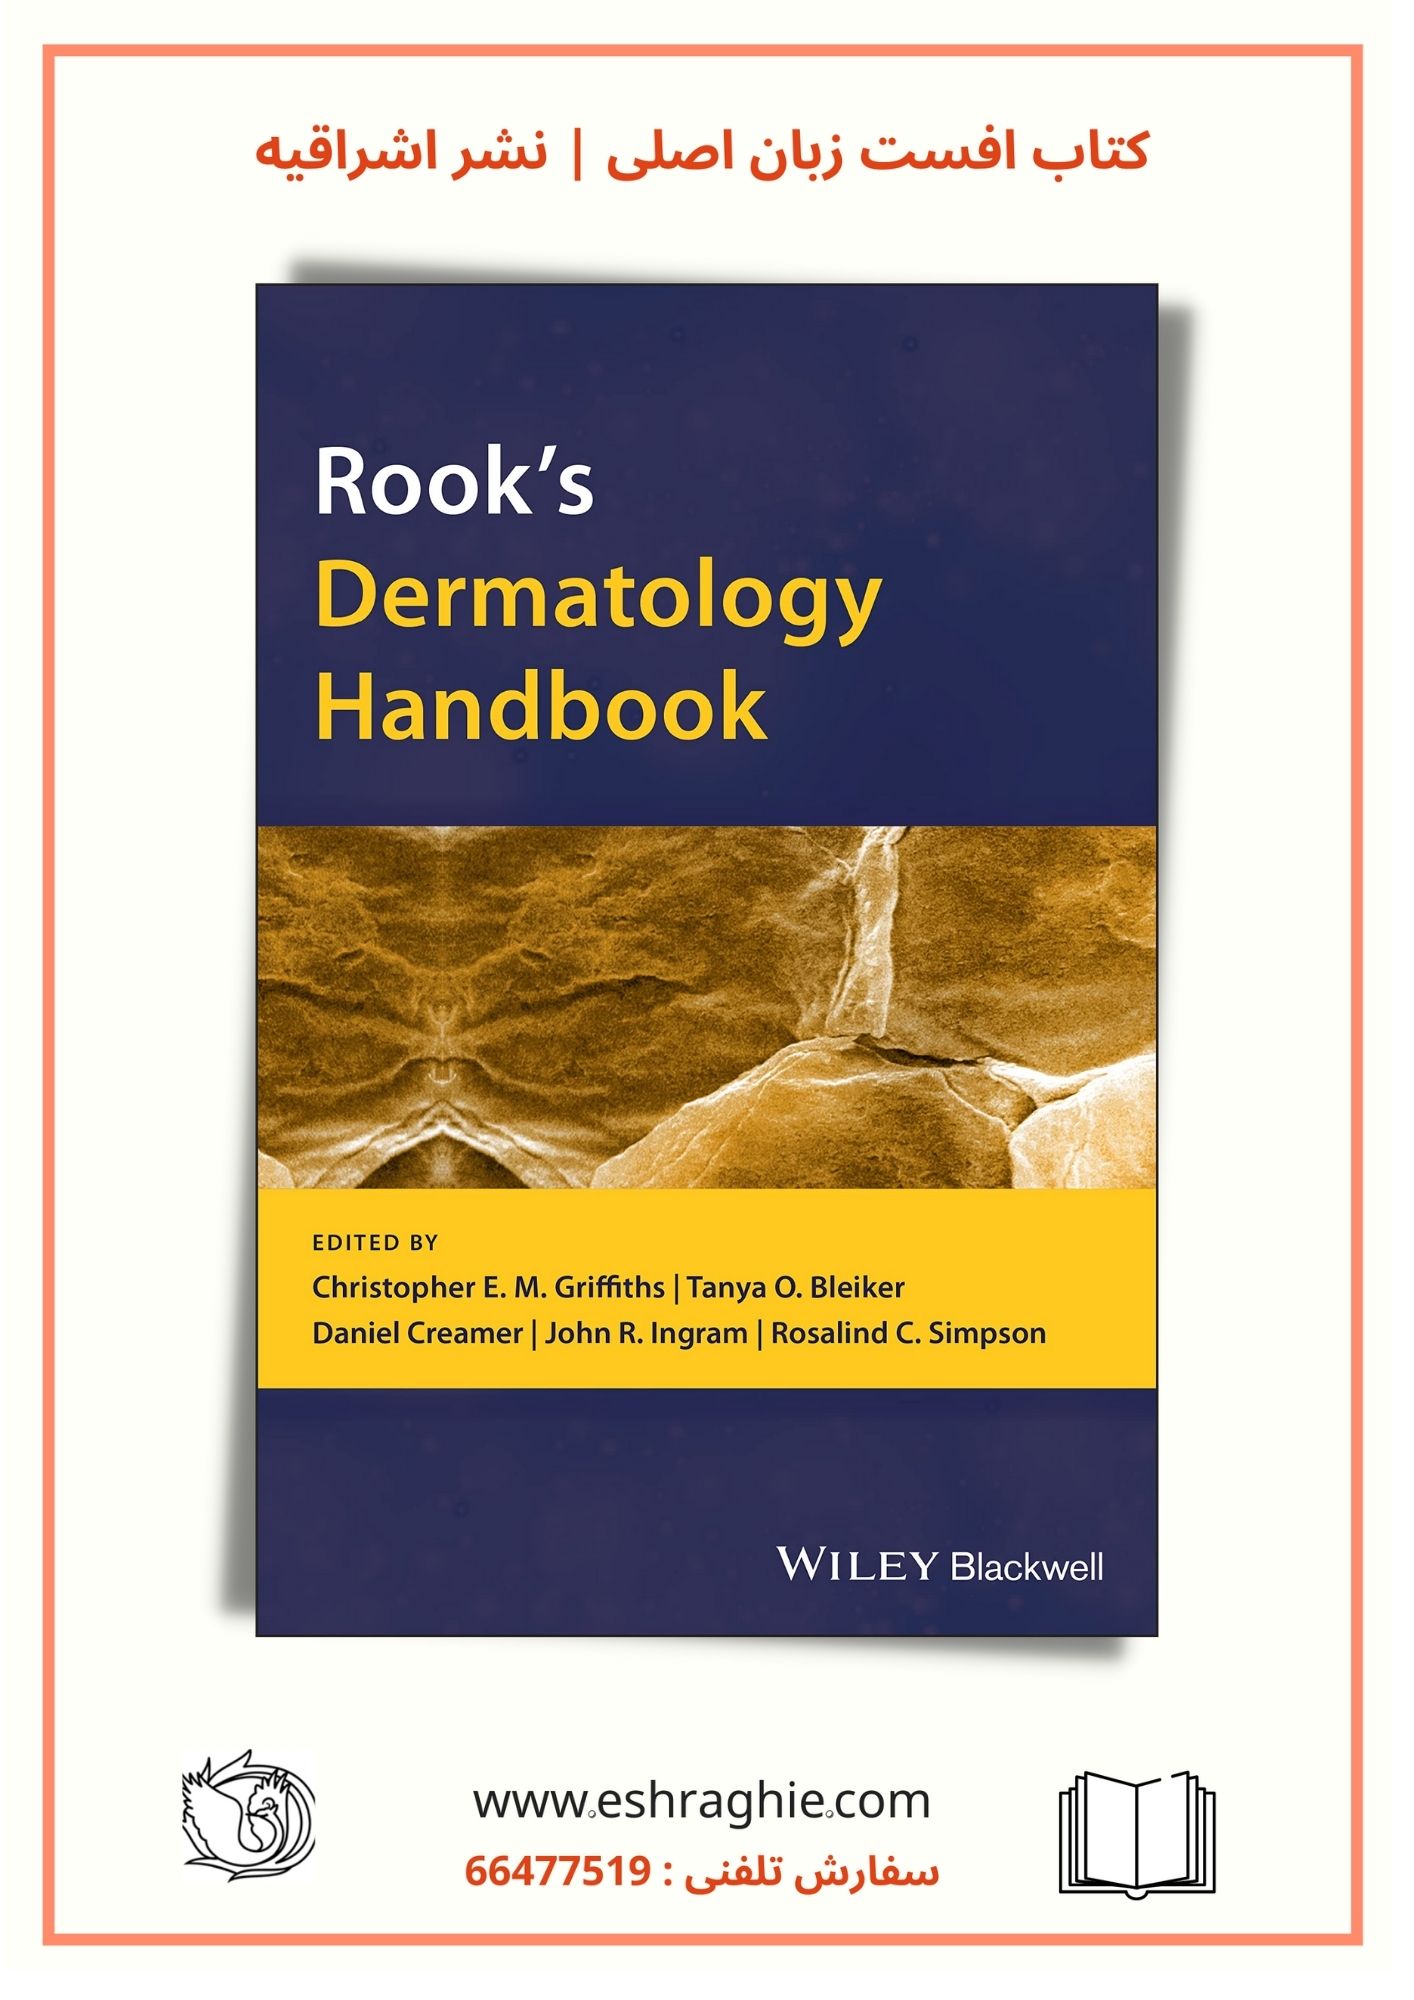 Rook's Dermatology Handbook 2022